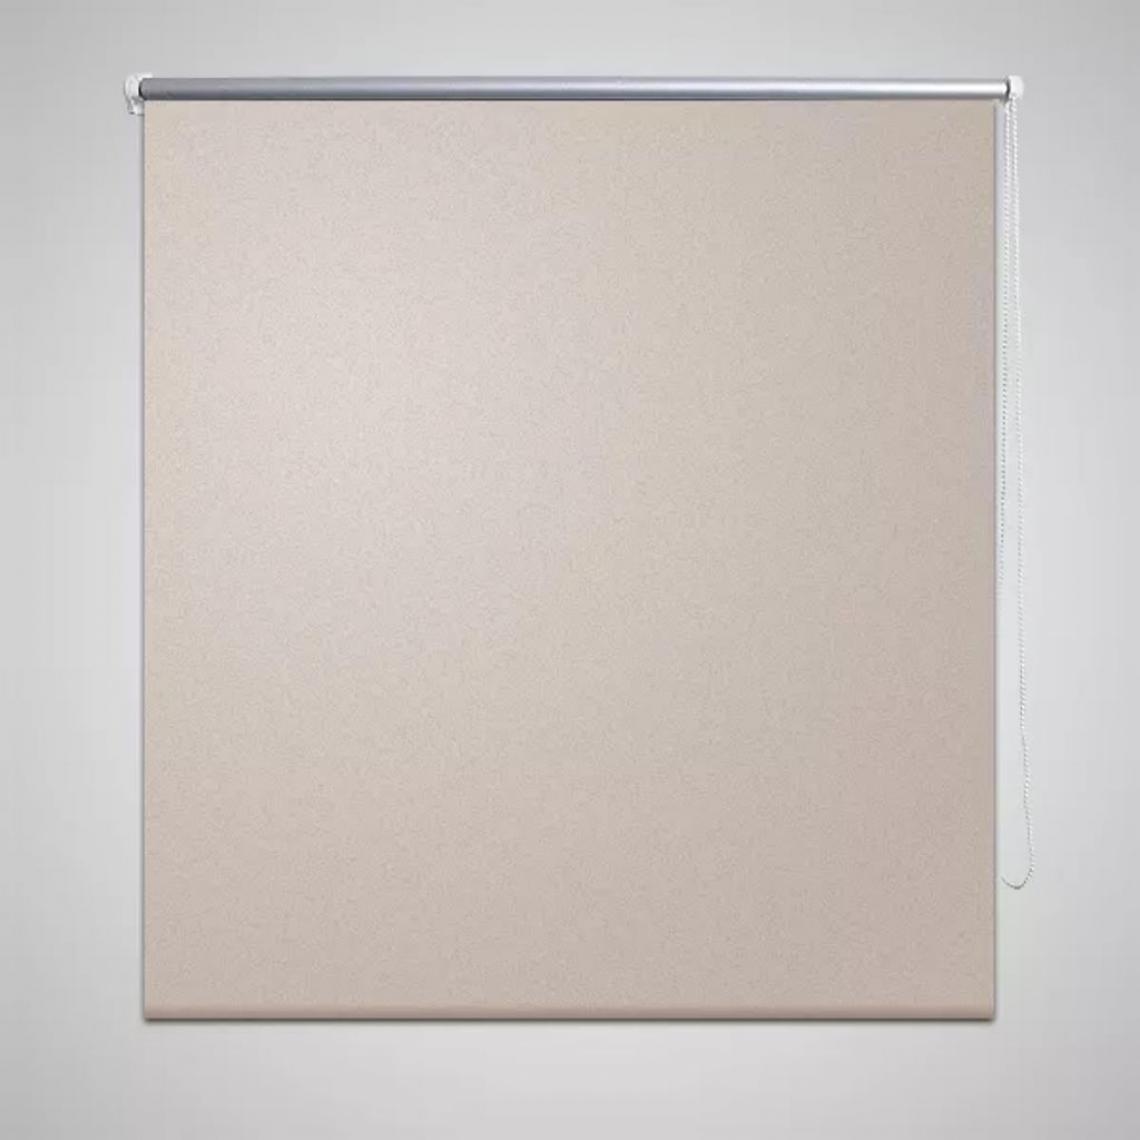 Hucoco - Store enrouleur occultant beige 40 x 100 cm - Beige - Store compatible Velux